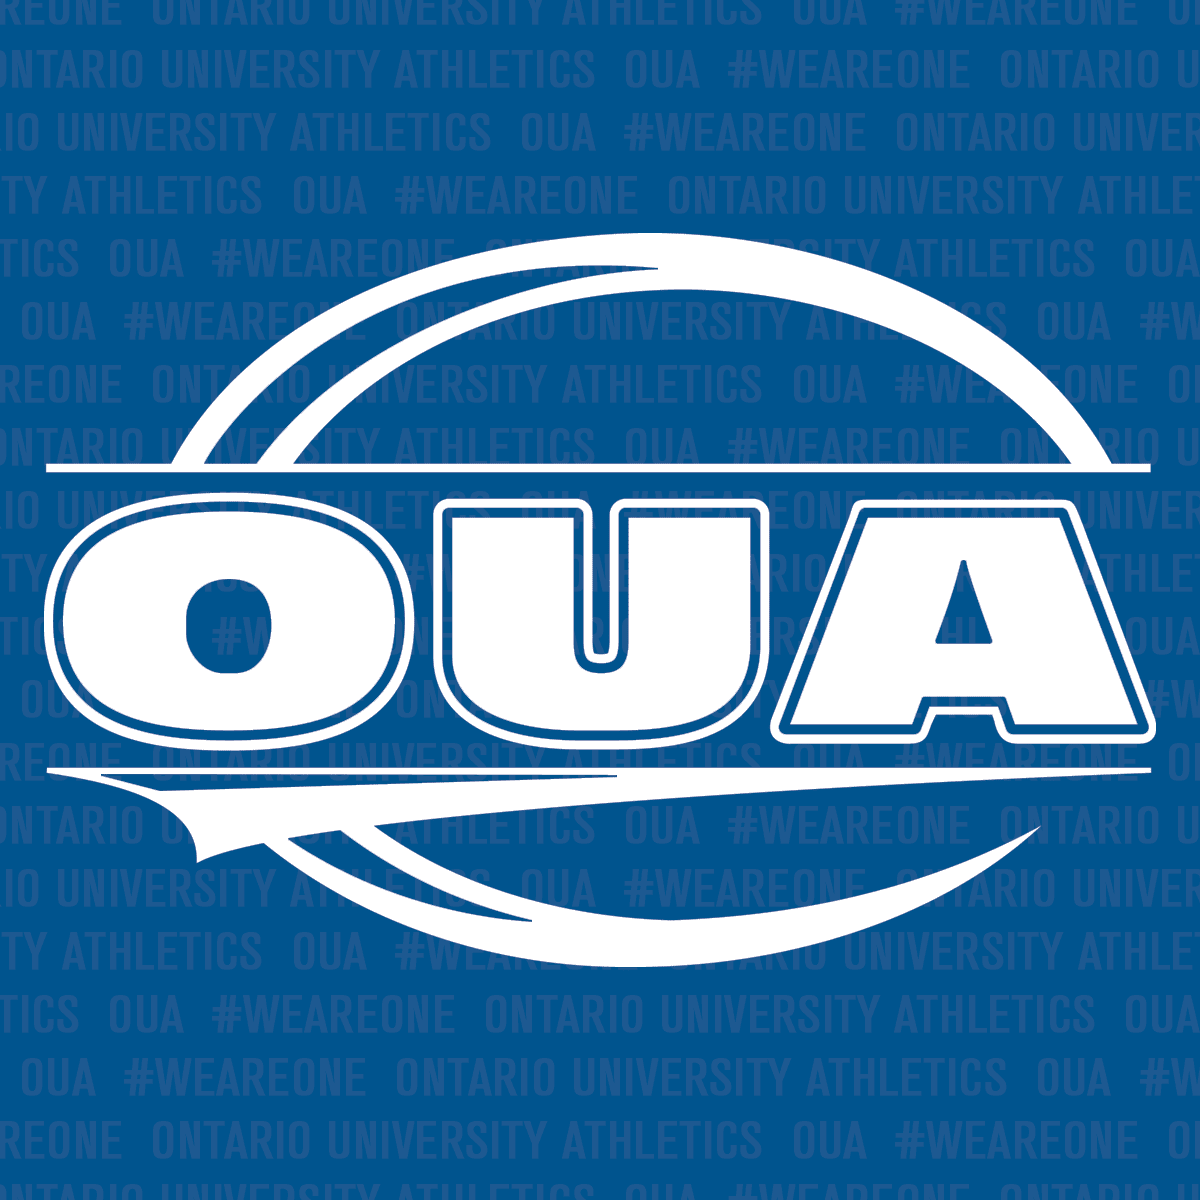 Ontario University Athletics | Organizational Profile, Work & Jobs